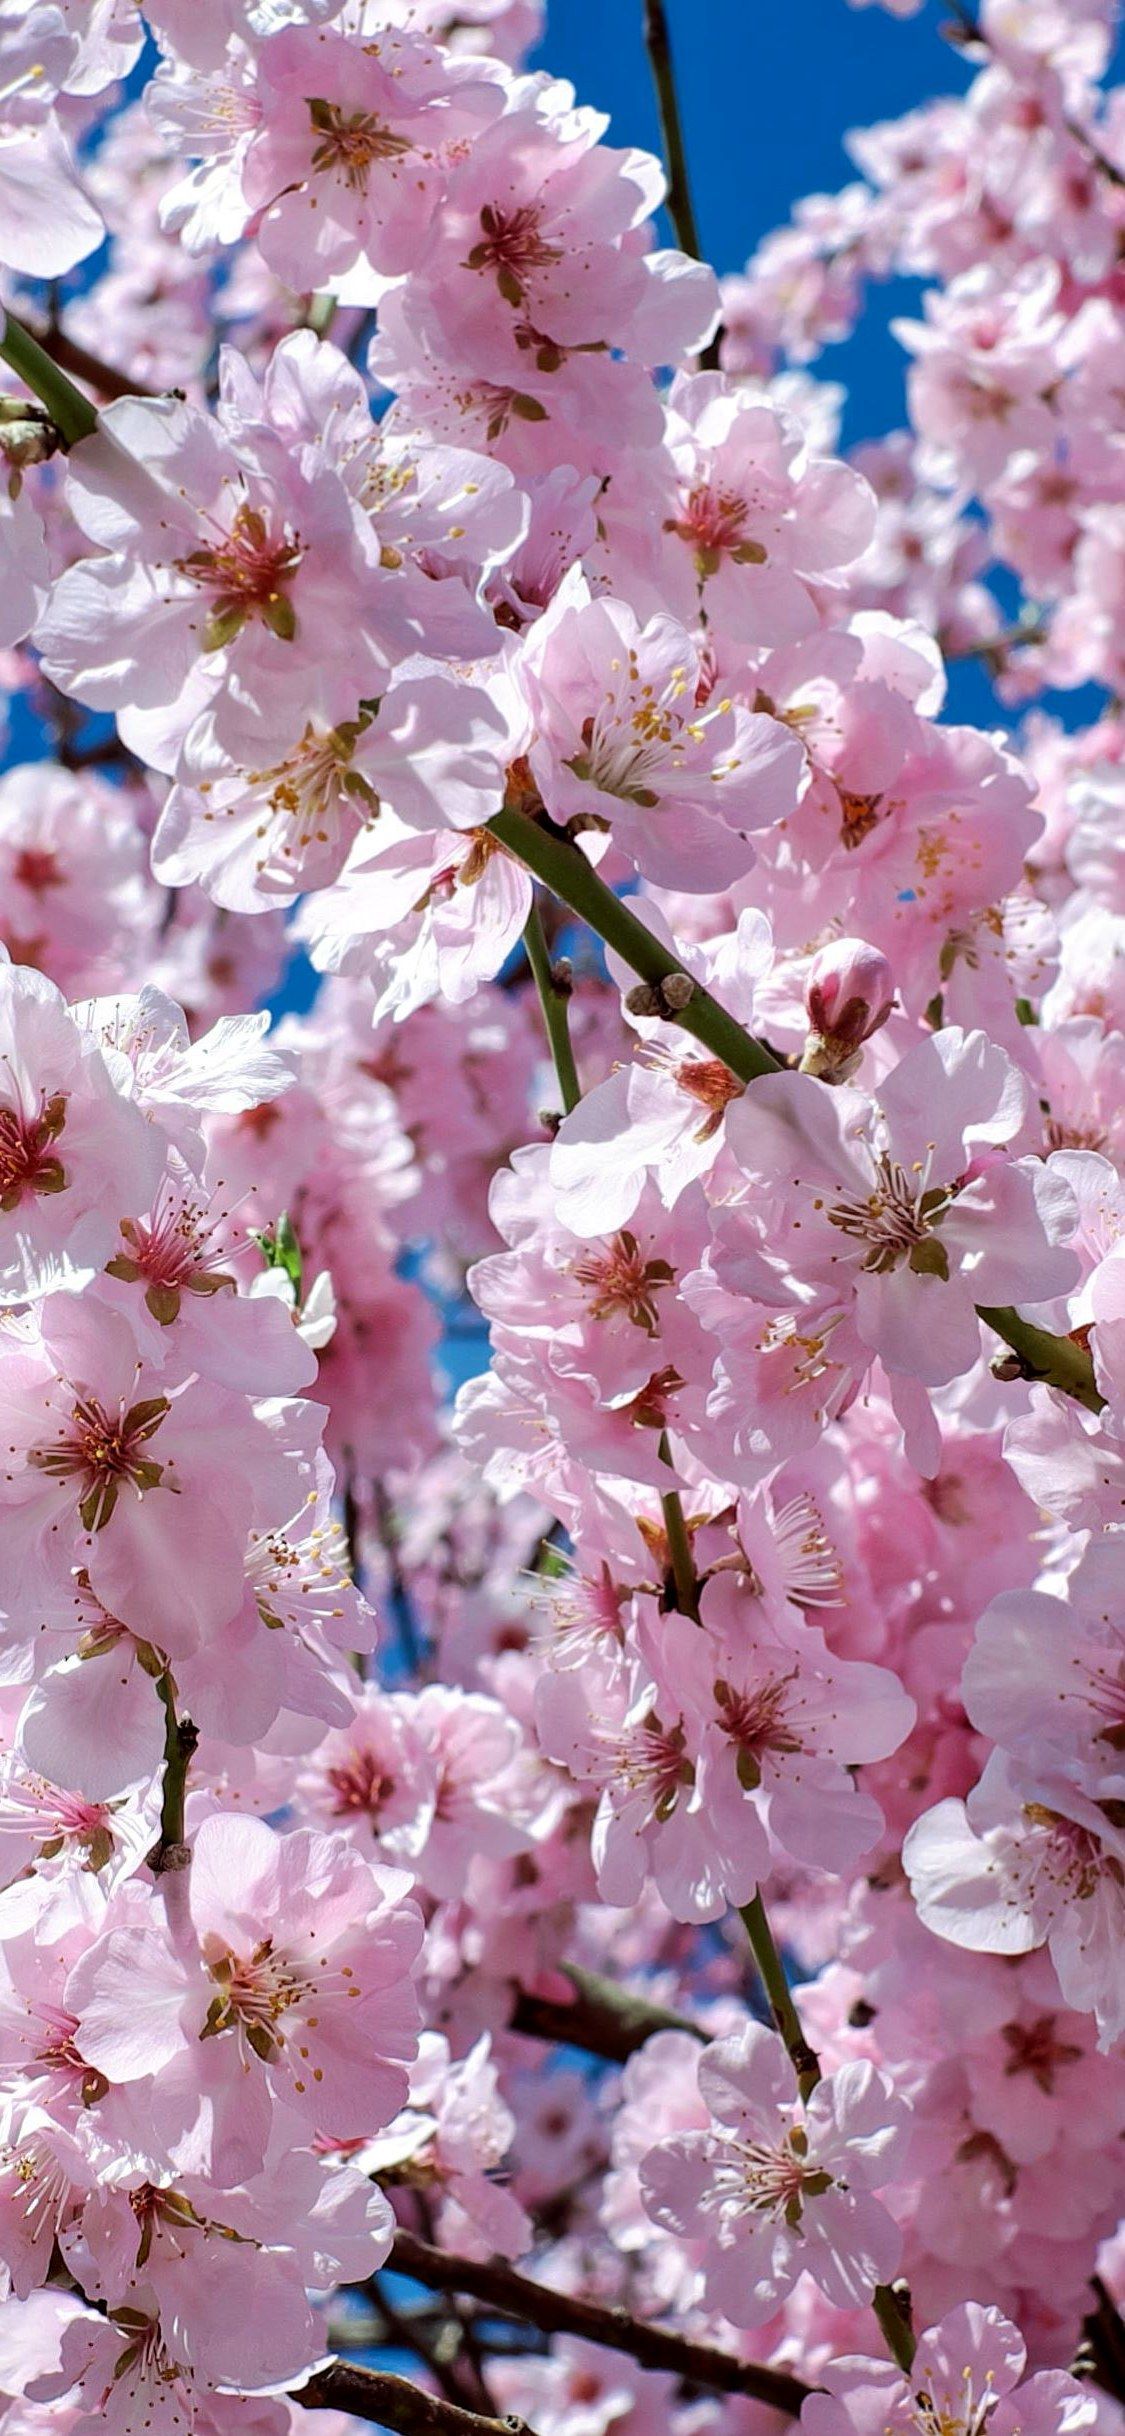 japanese cherry trees flowers pink tree wallpaper iPhone X Wallpaper. Tree wallpaper iphone, Japanese cherry tree, Cherry blossom wallpaper